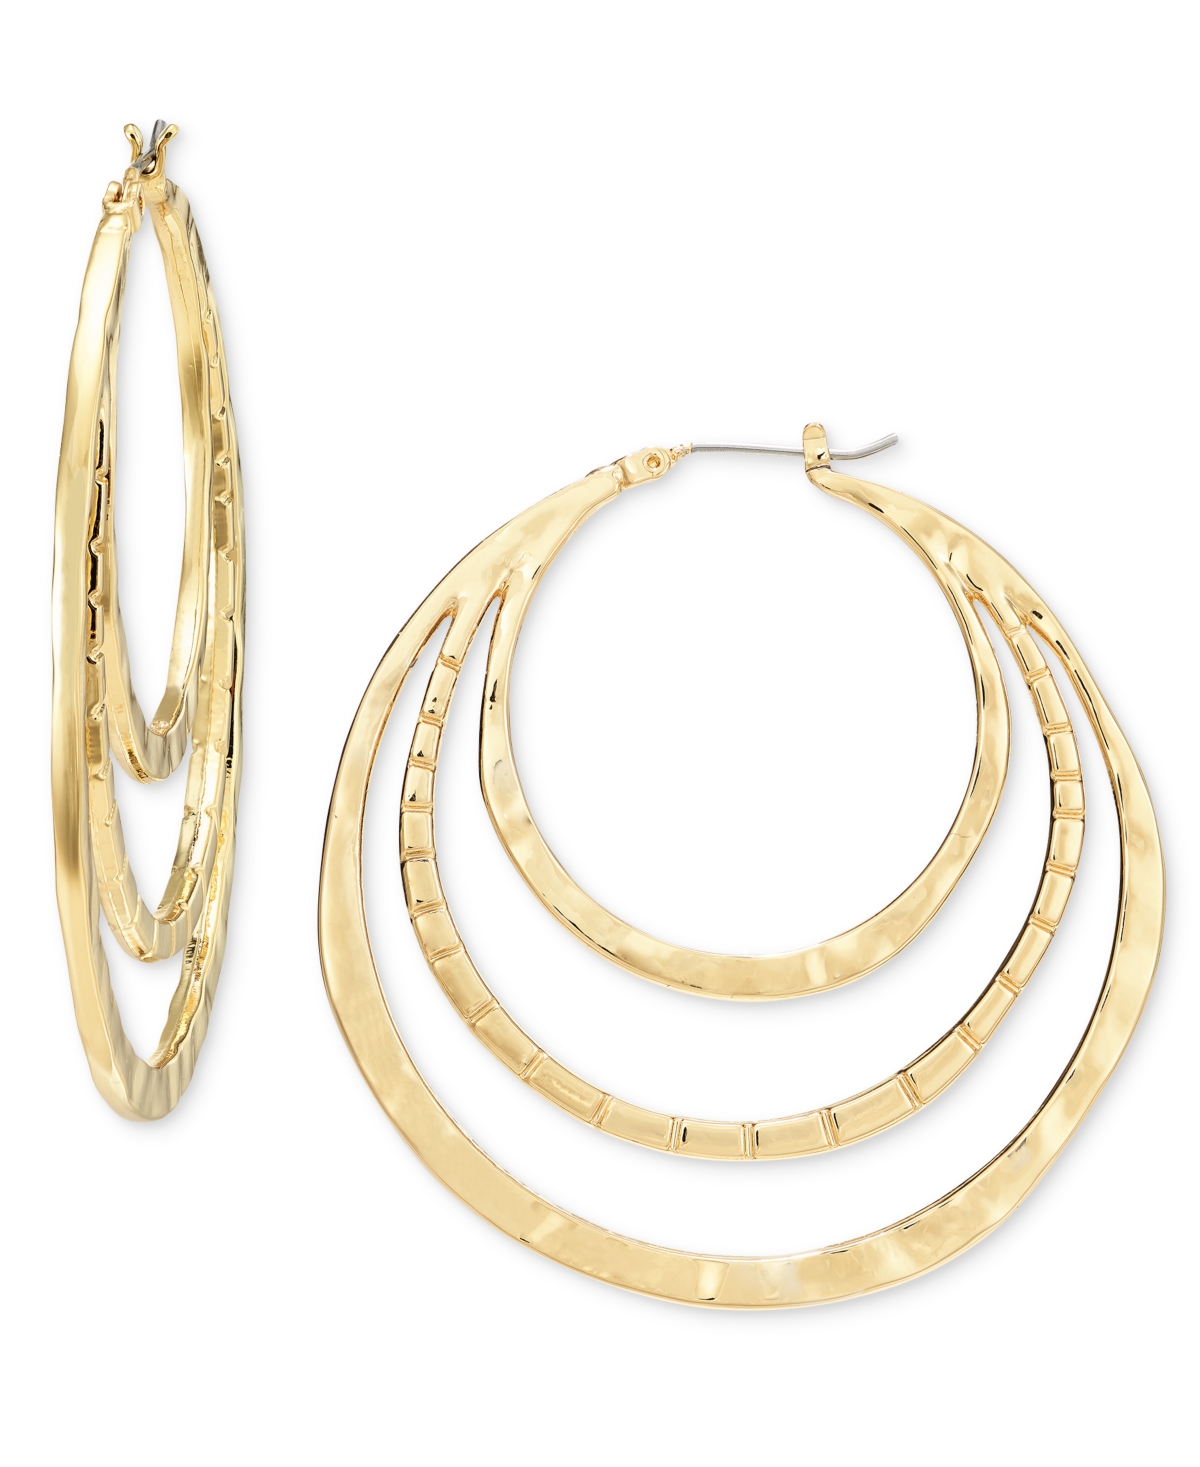 Gold-Tone Multi-Row Hoop Earrings, 2", Created for Macy's - Gold